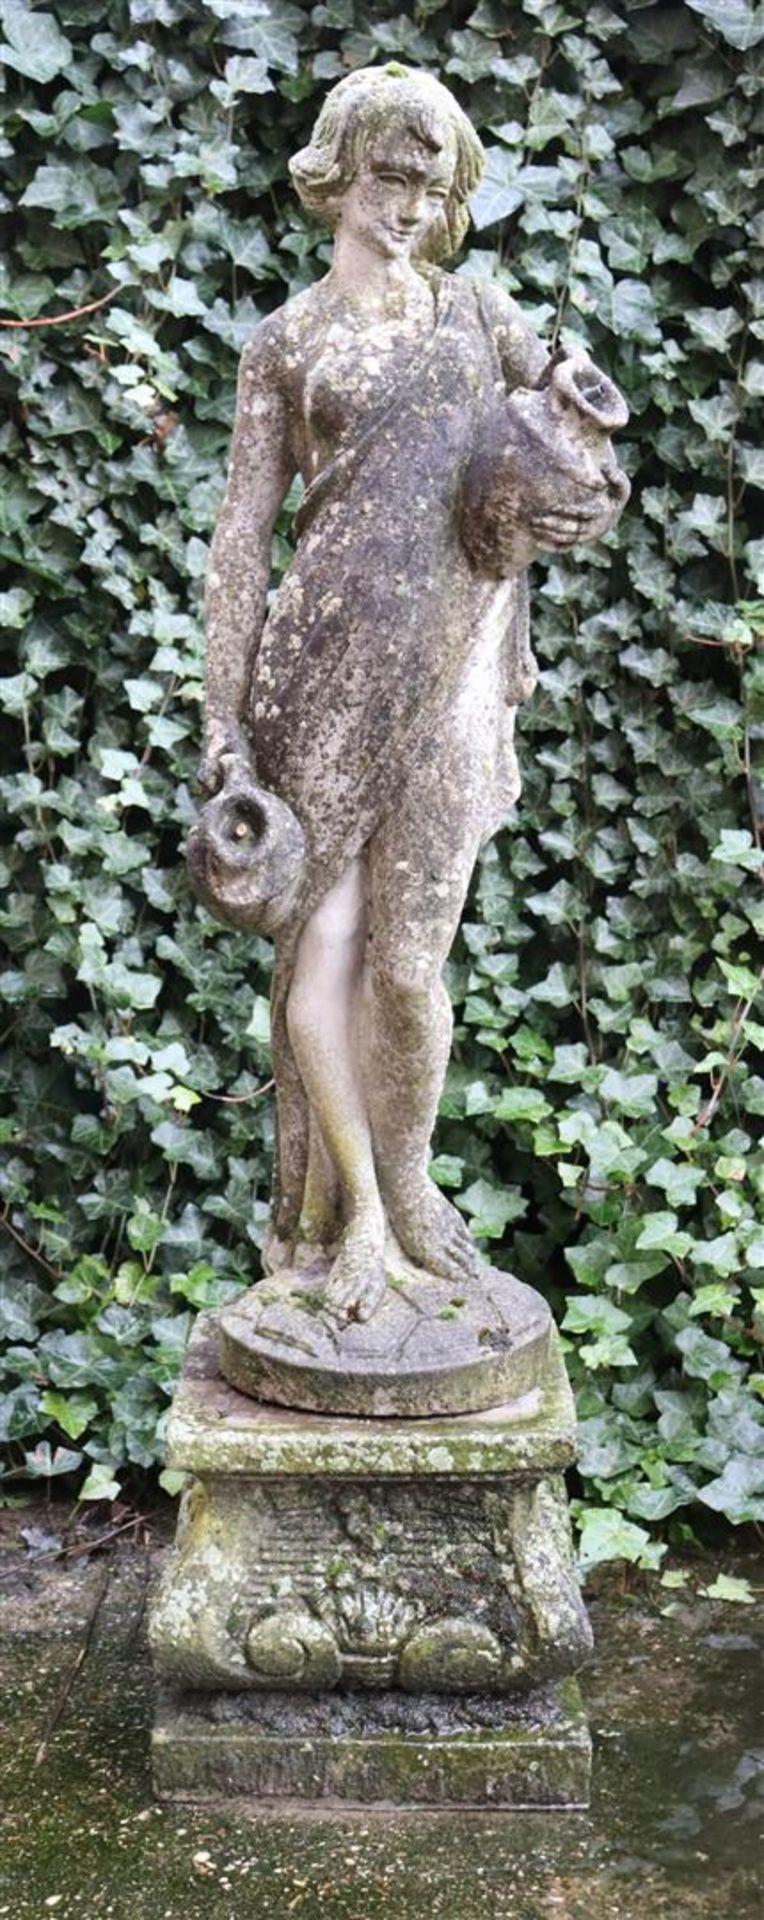 Composite garden sculpture of a woman